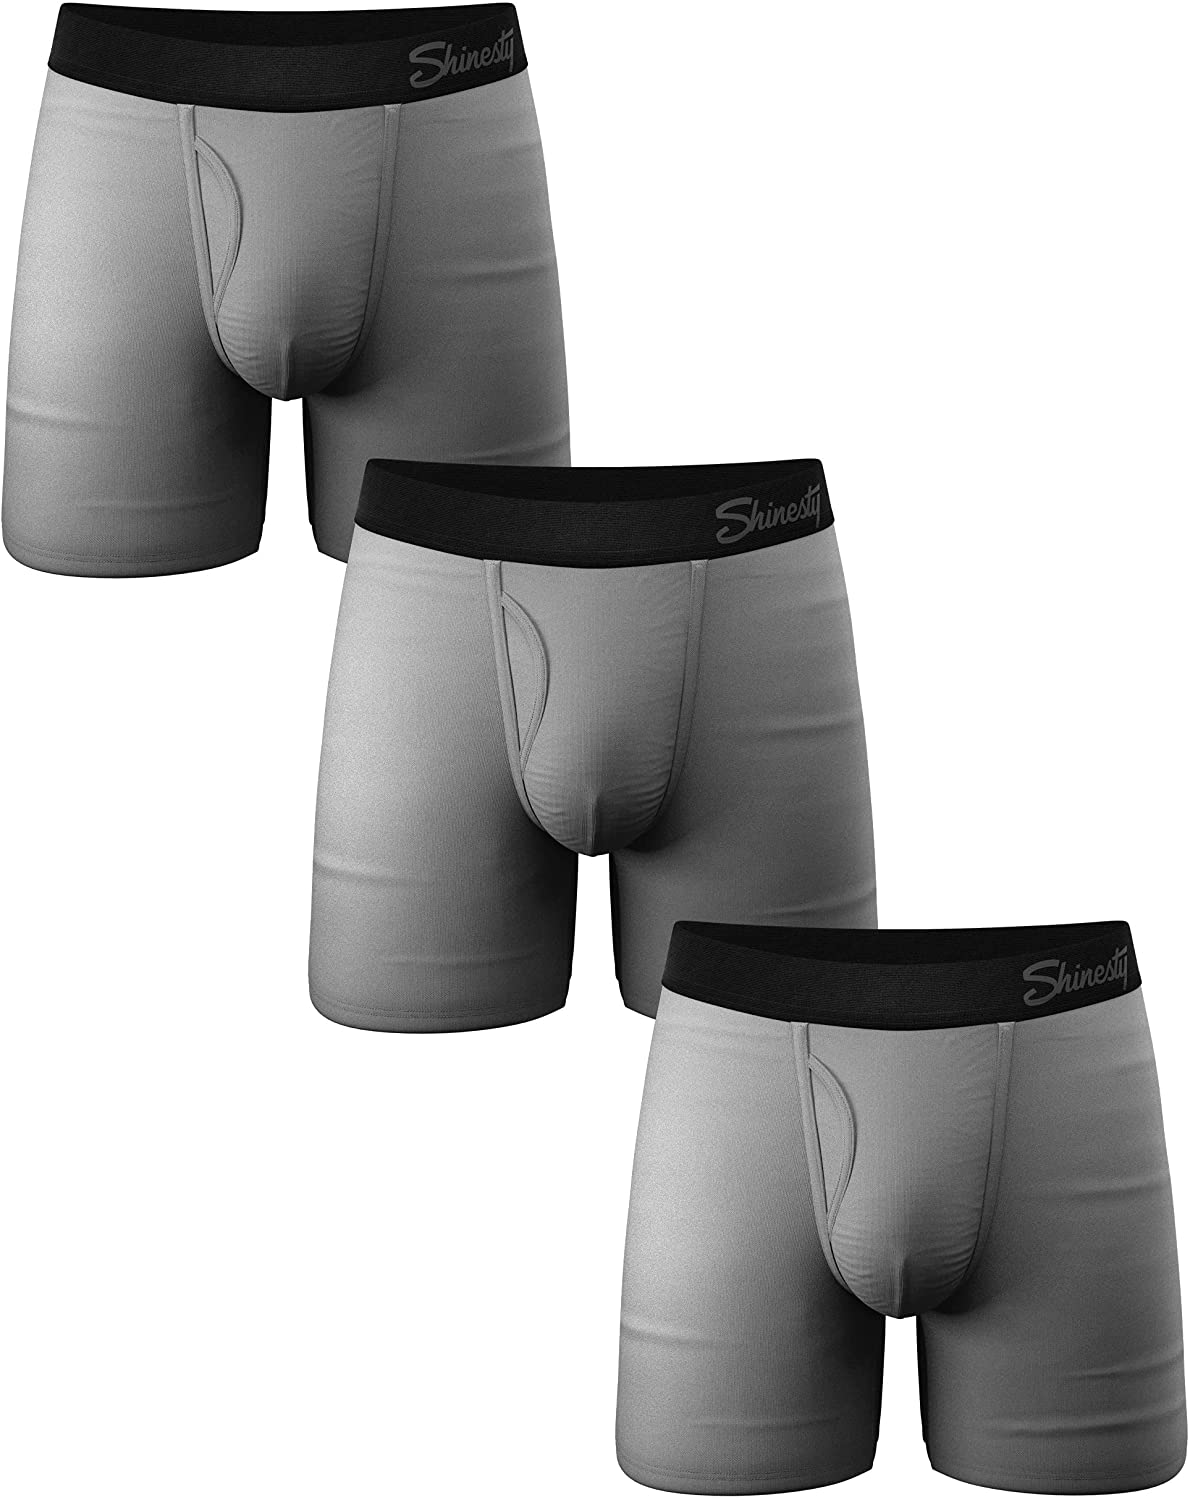 Shinesty Mens Boxer Brief w/ fly 3 Pack - Men's Ball Hammock Pouch Underwear  3 P